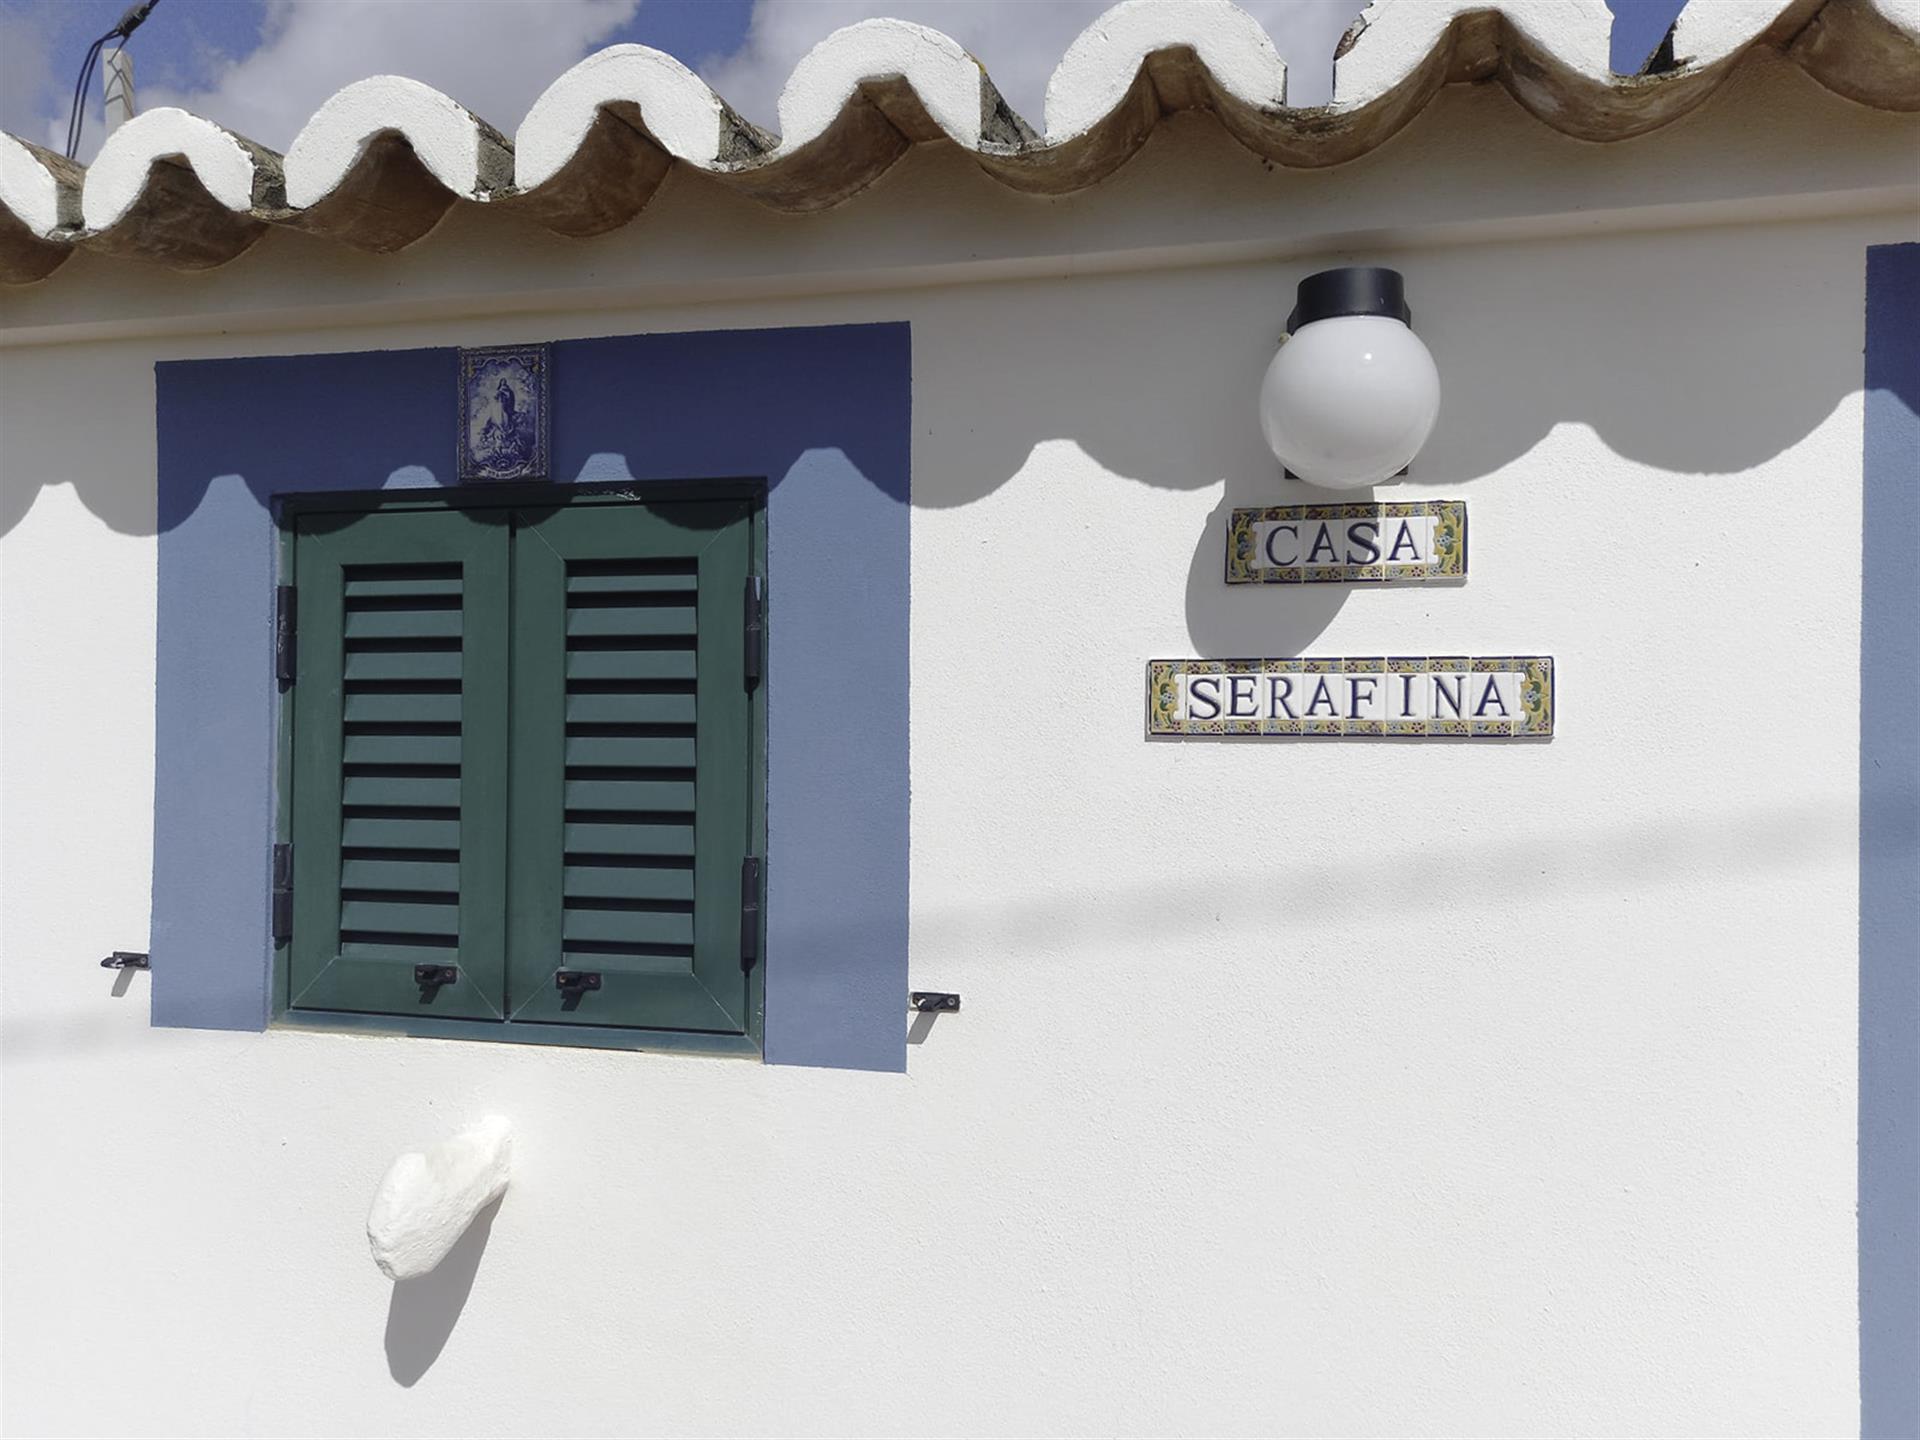 1 Bed + 1 Bed Houses - Tavira - Algarve